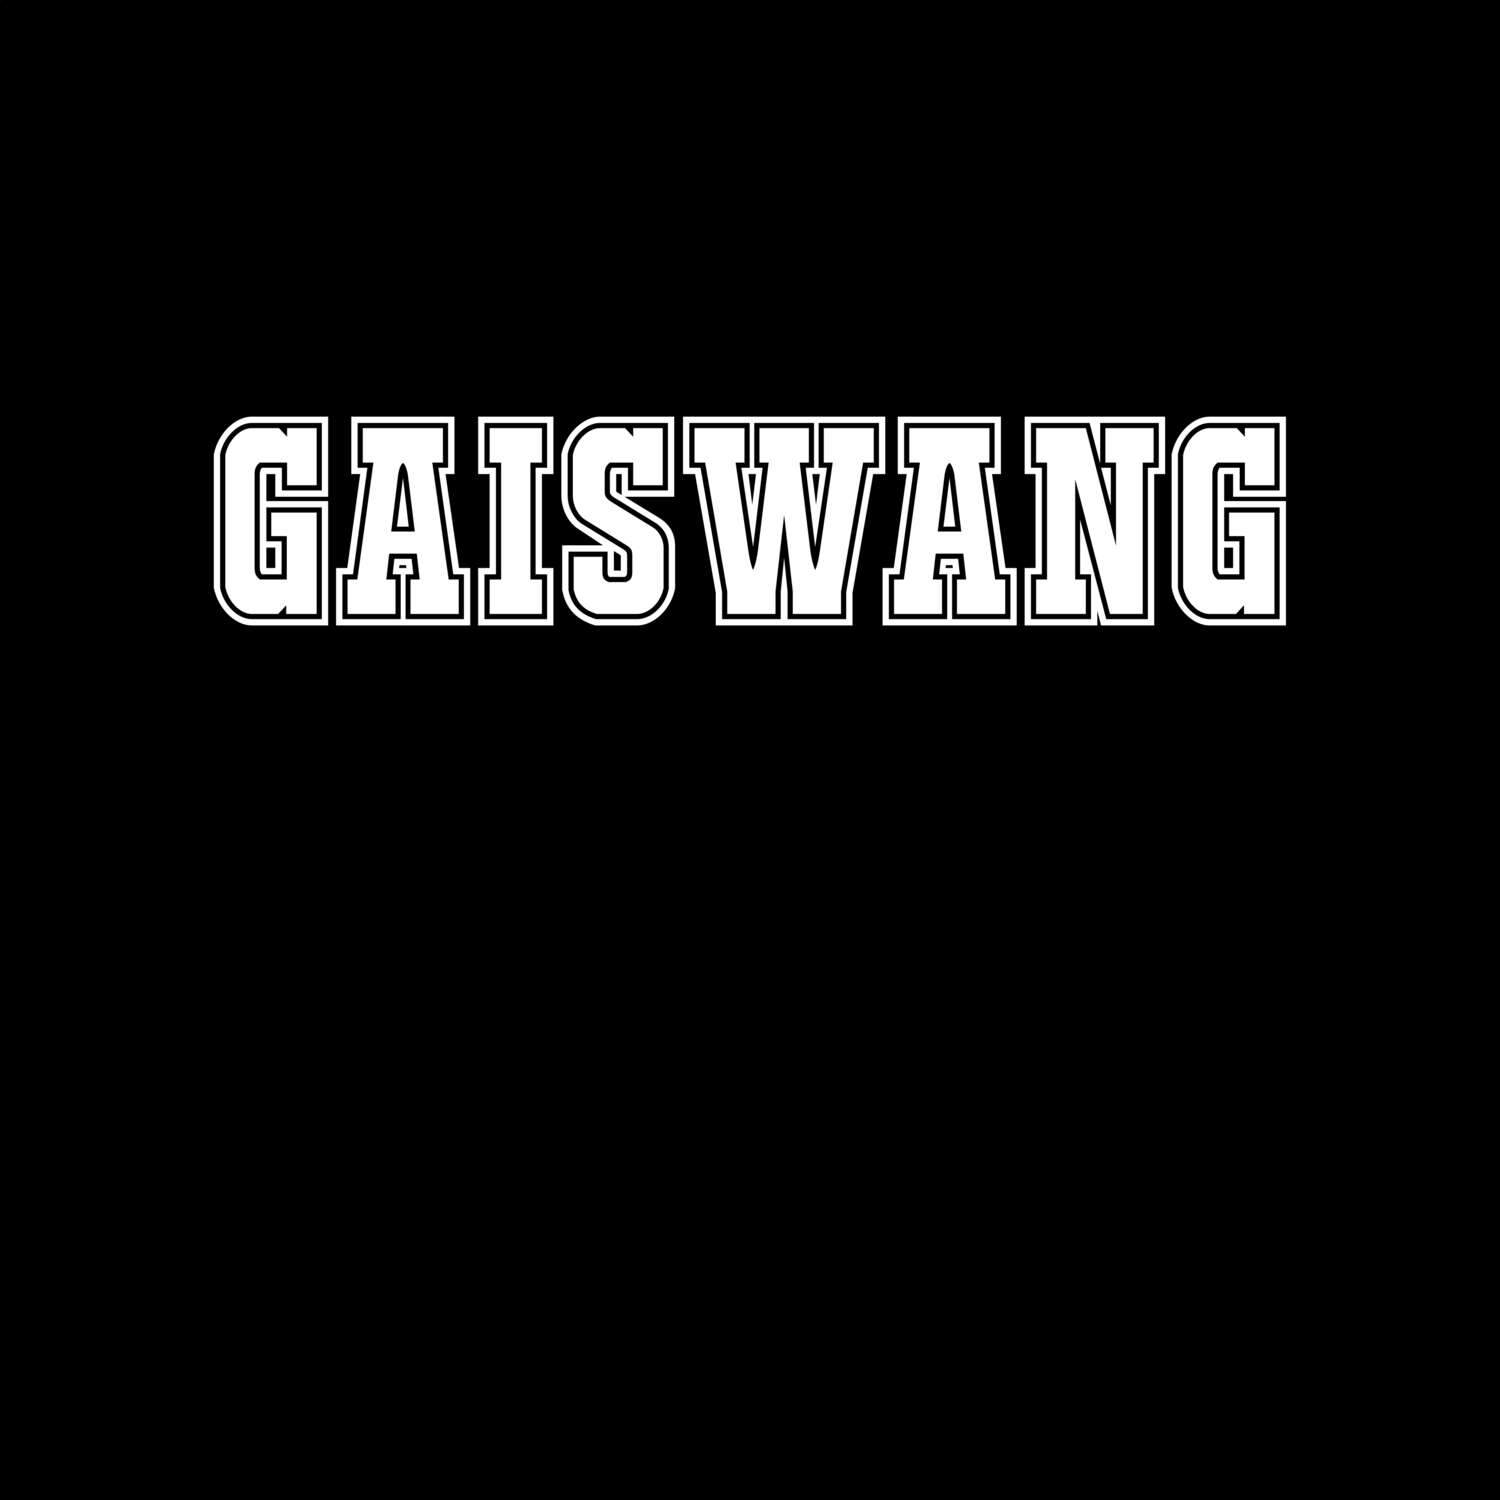 Gaiswang T-Shirt »Classic«